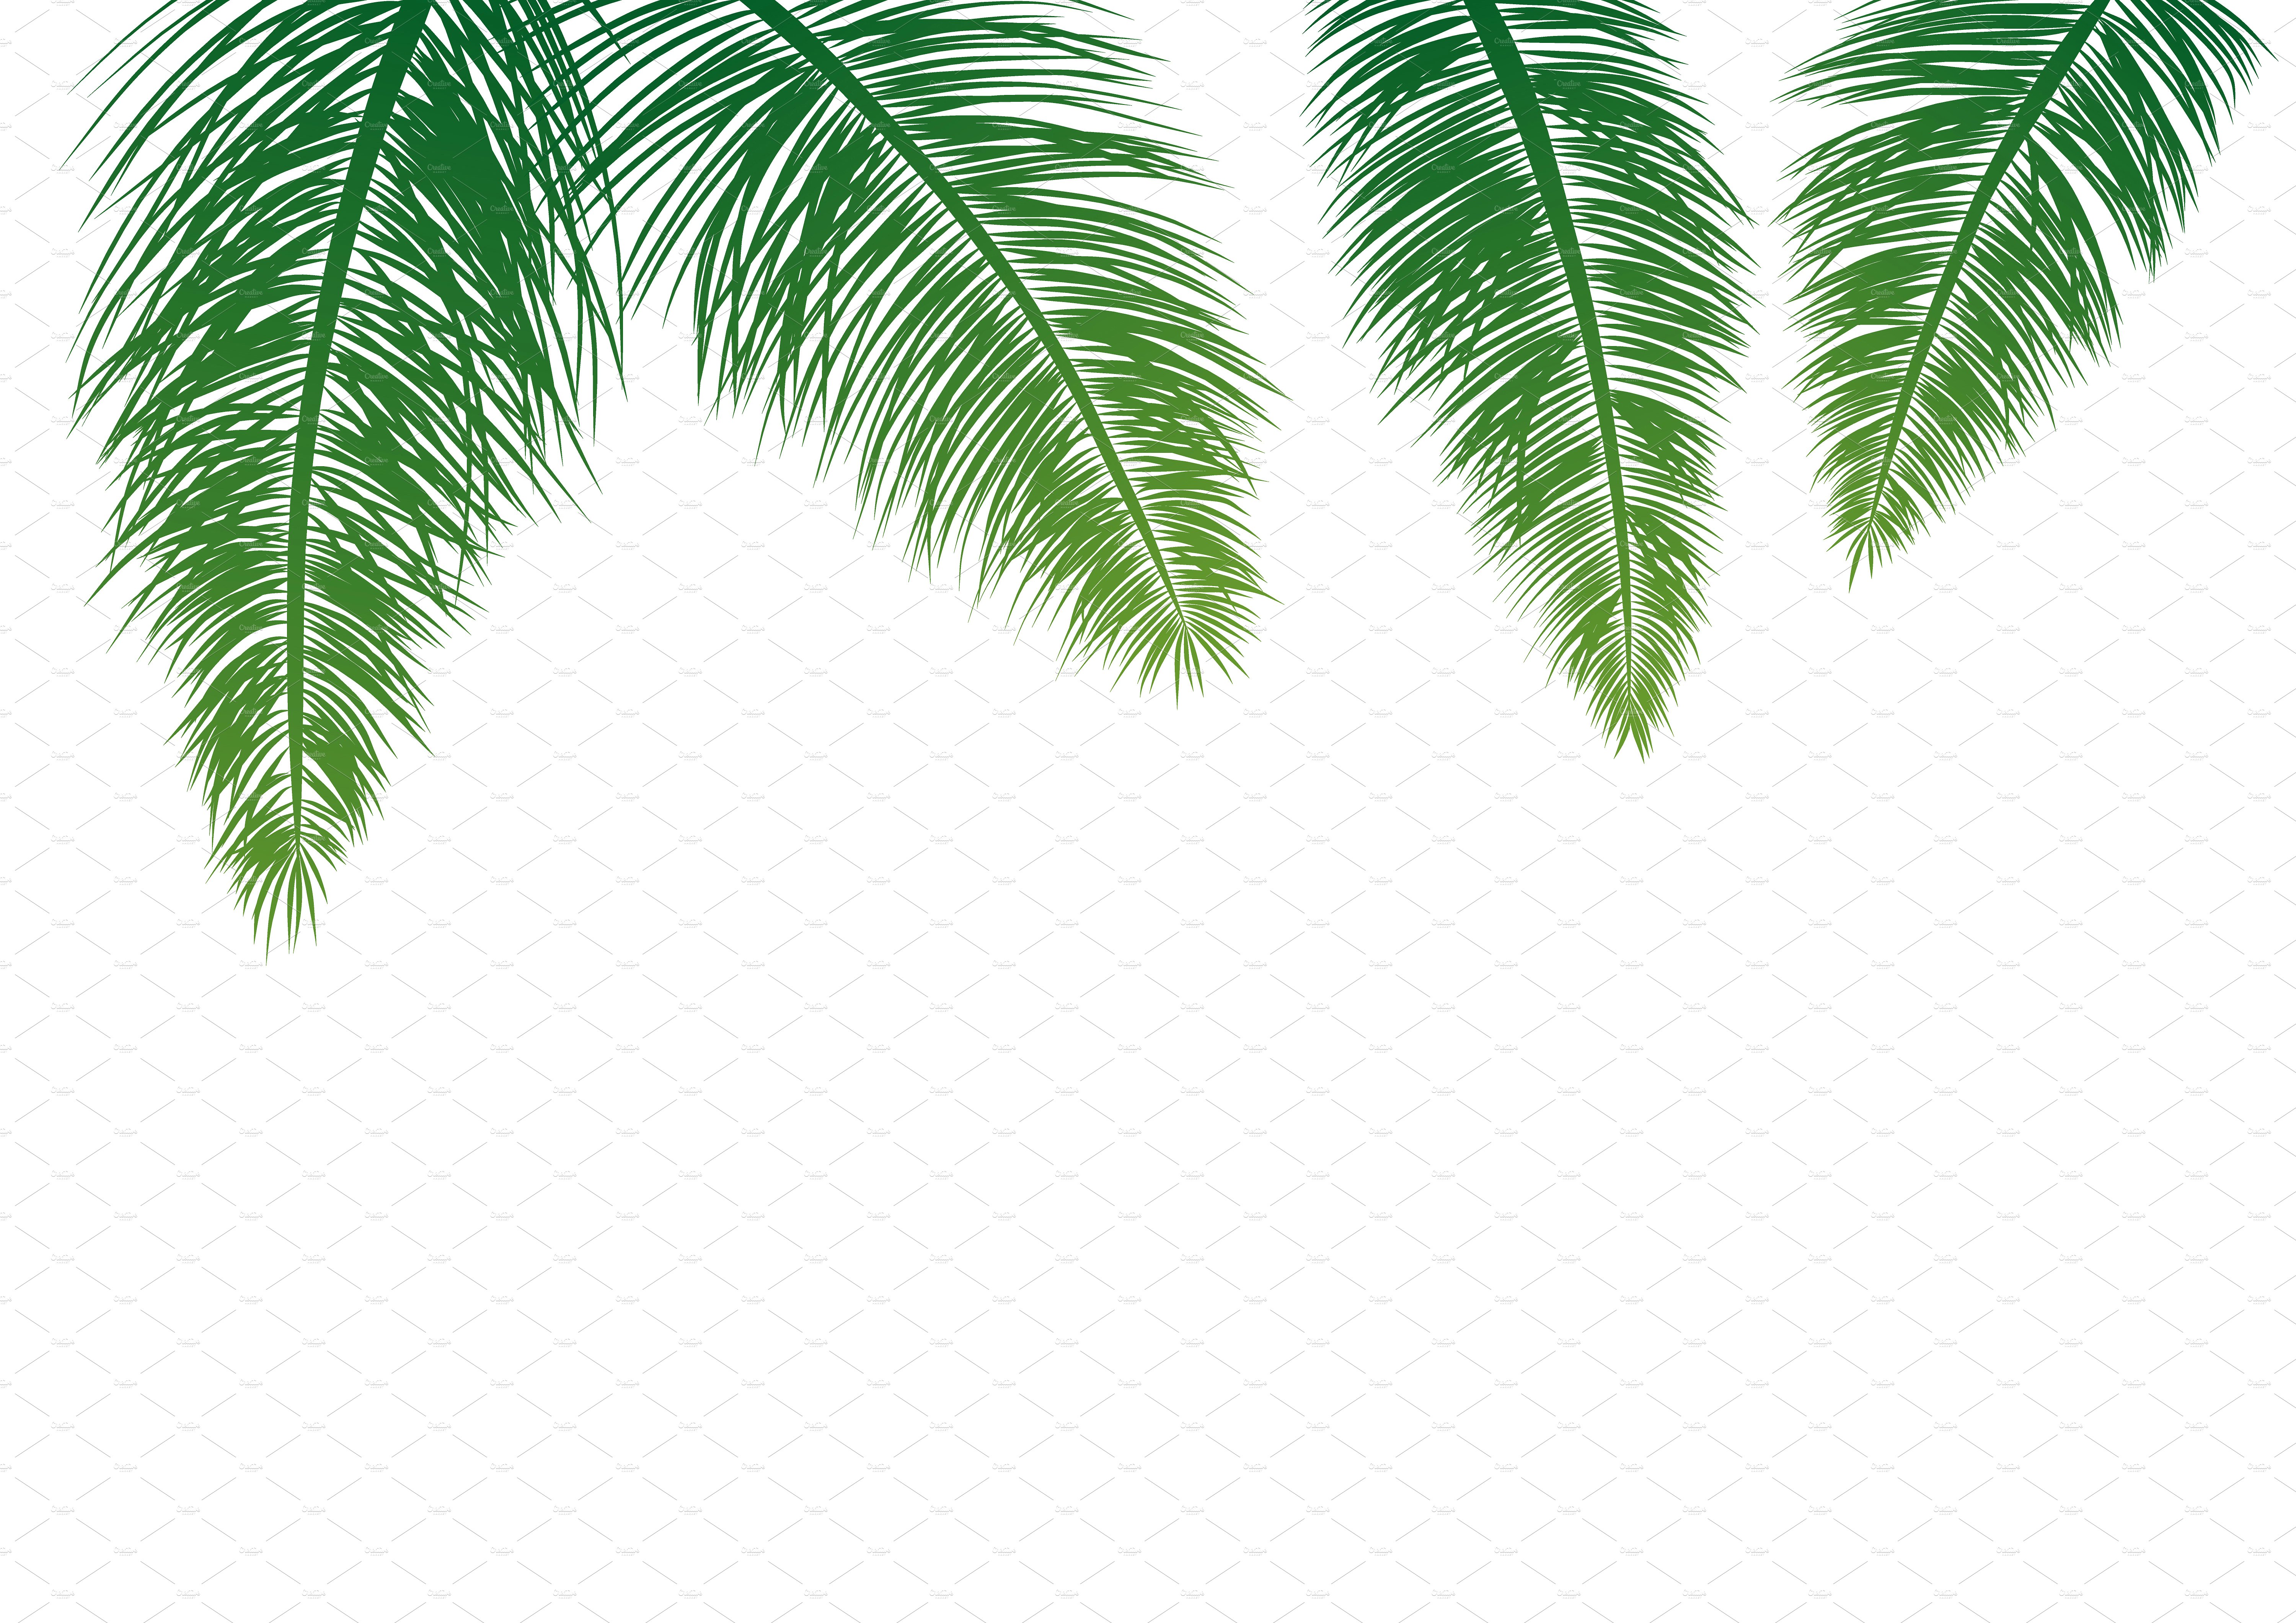 Coconut leaves on white background ~ Illustrations ~ Creative Market